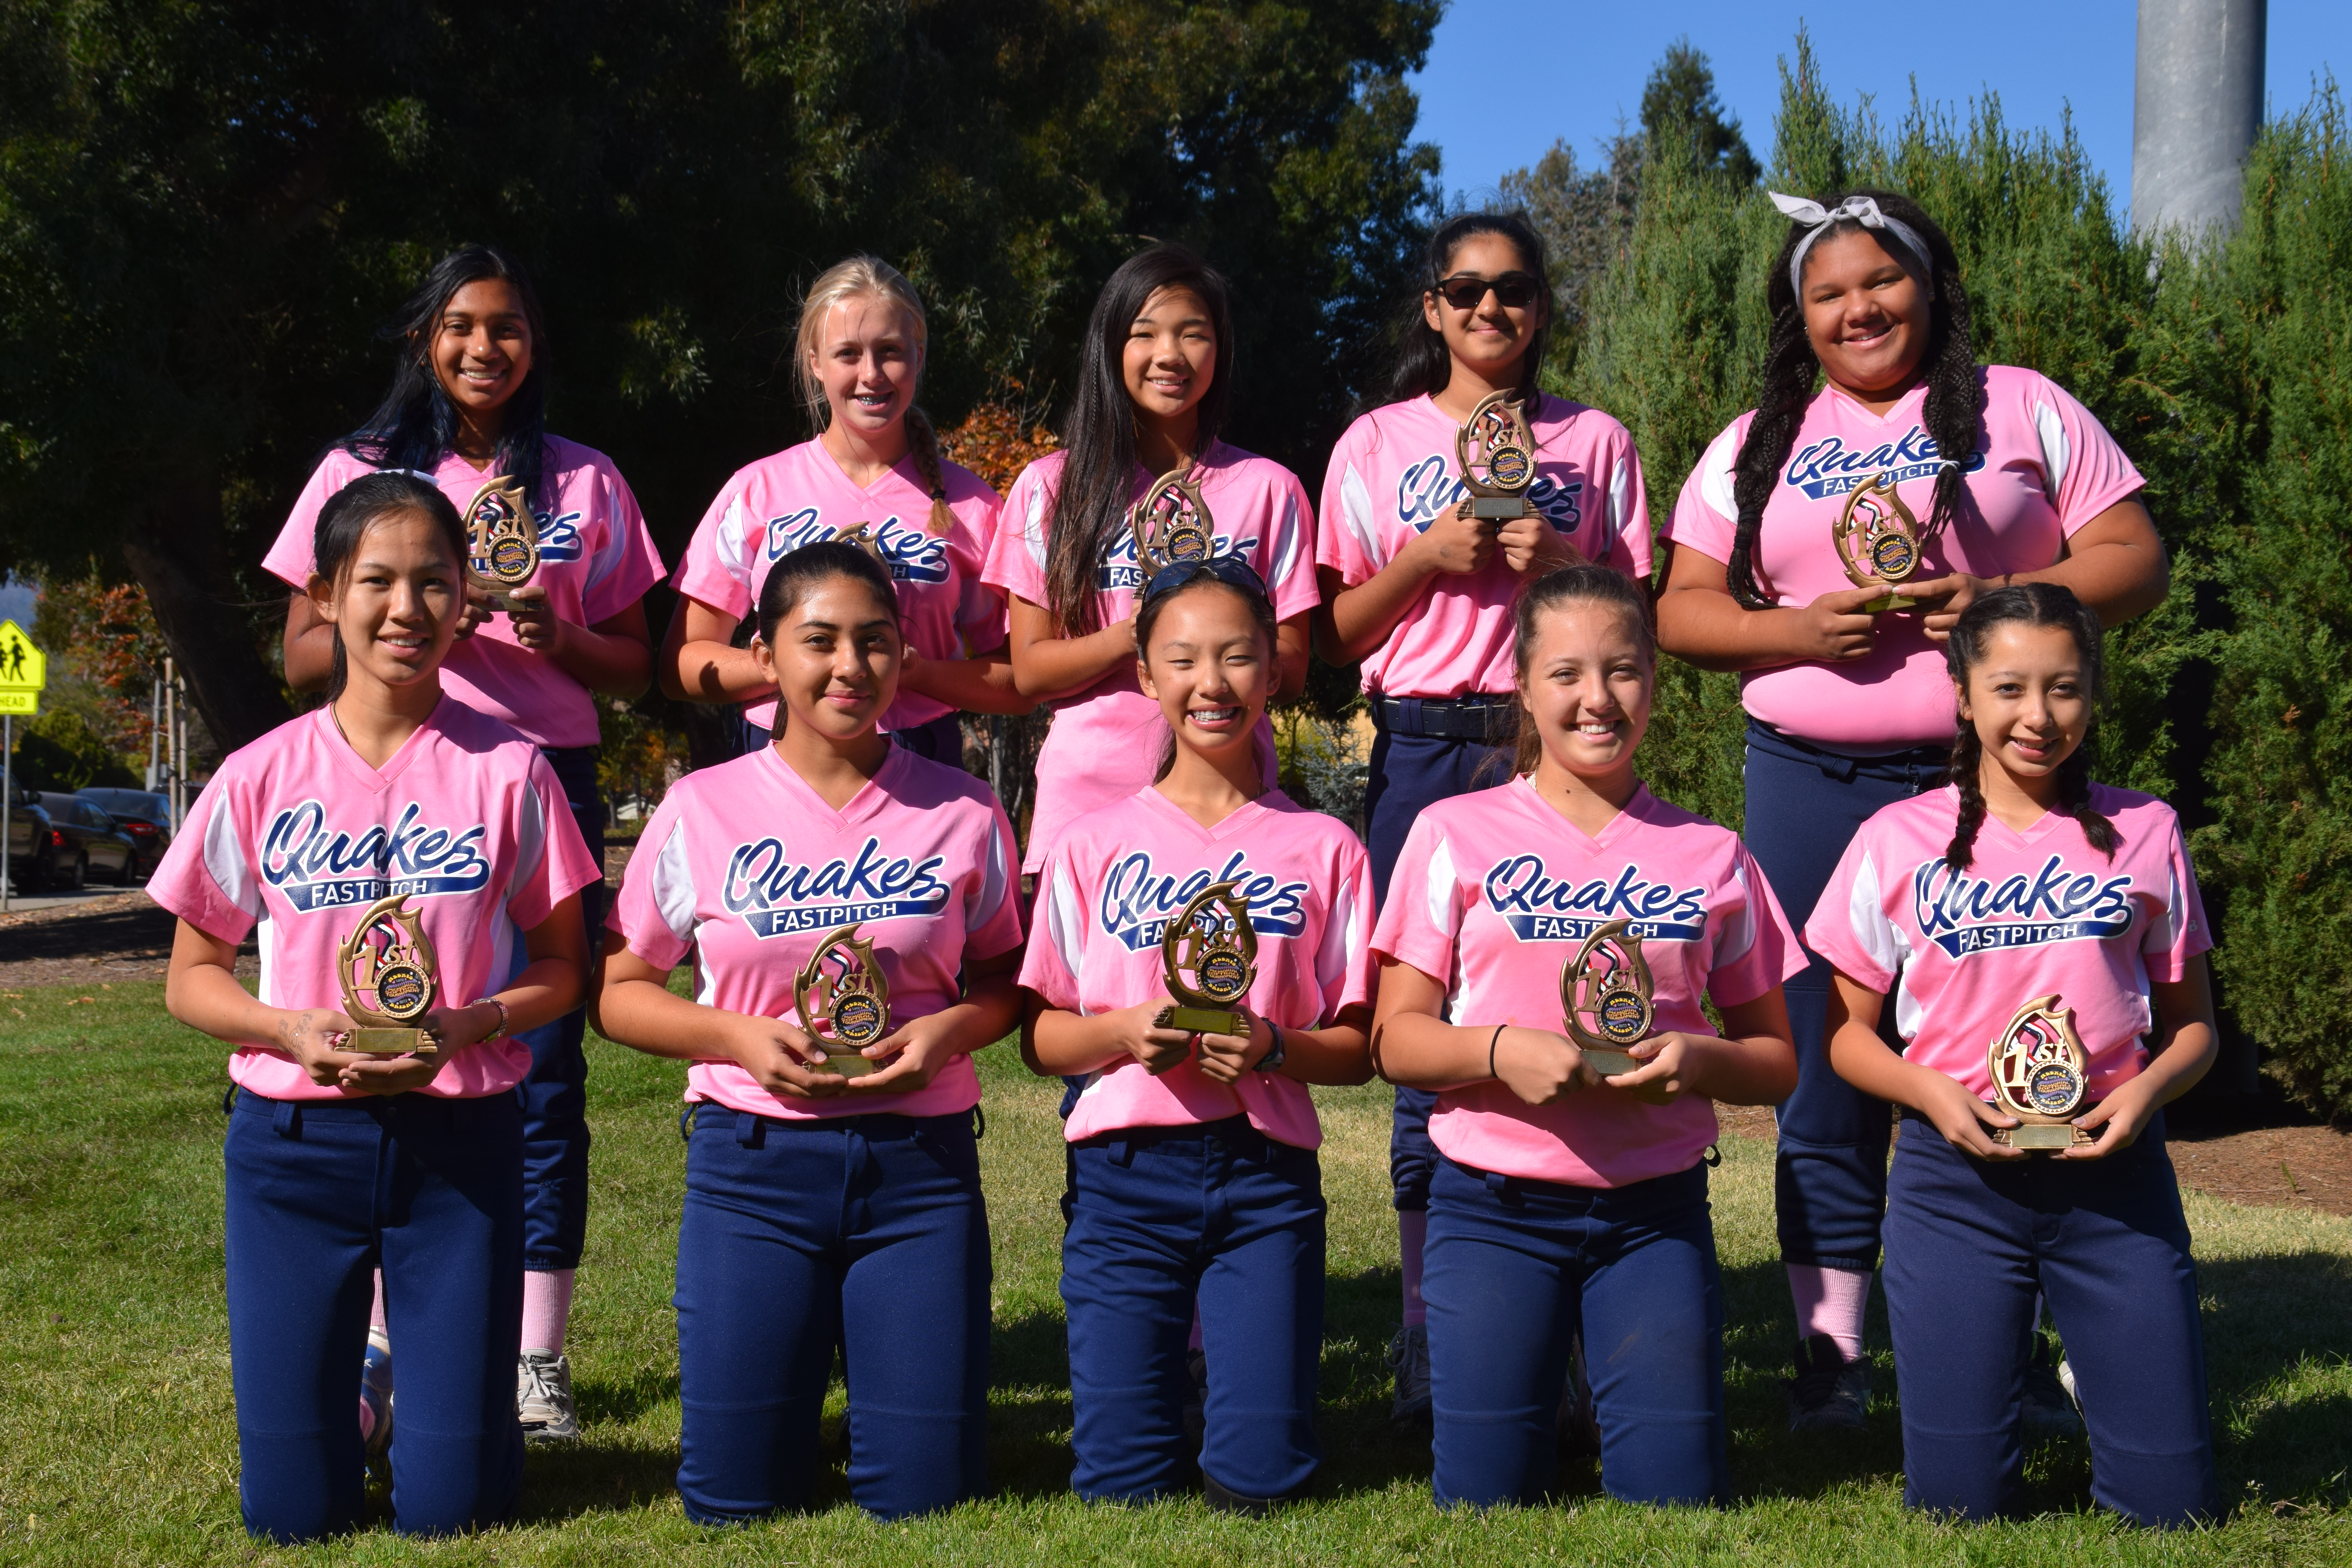 davehu – Sunnyvale Girls Softball League